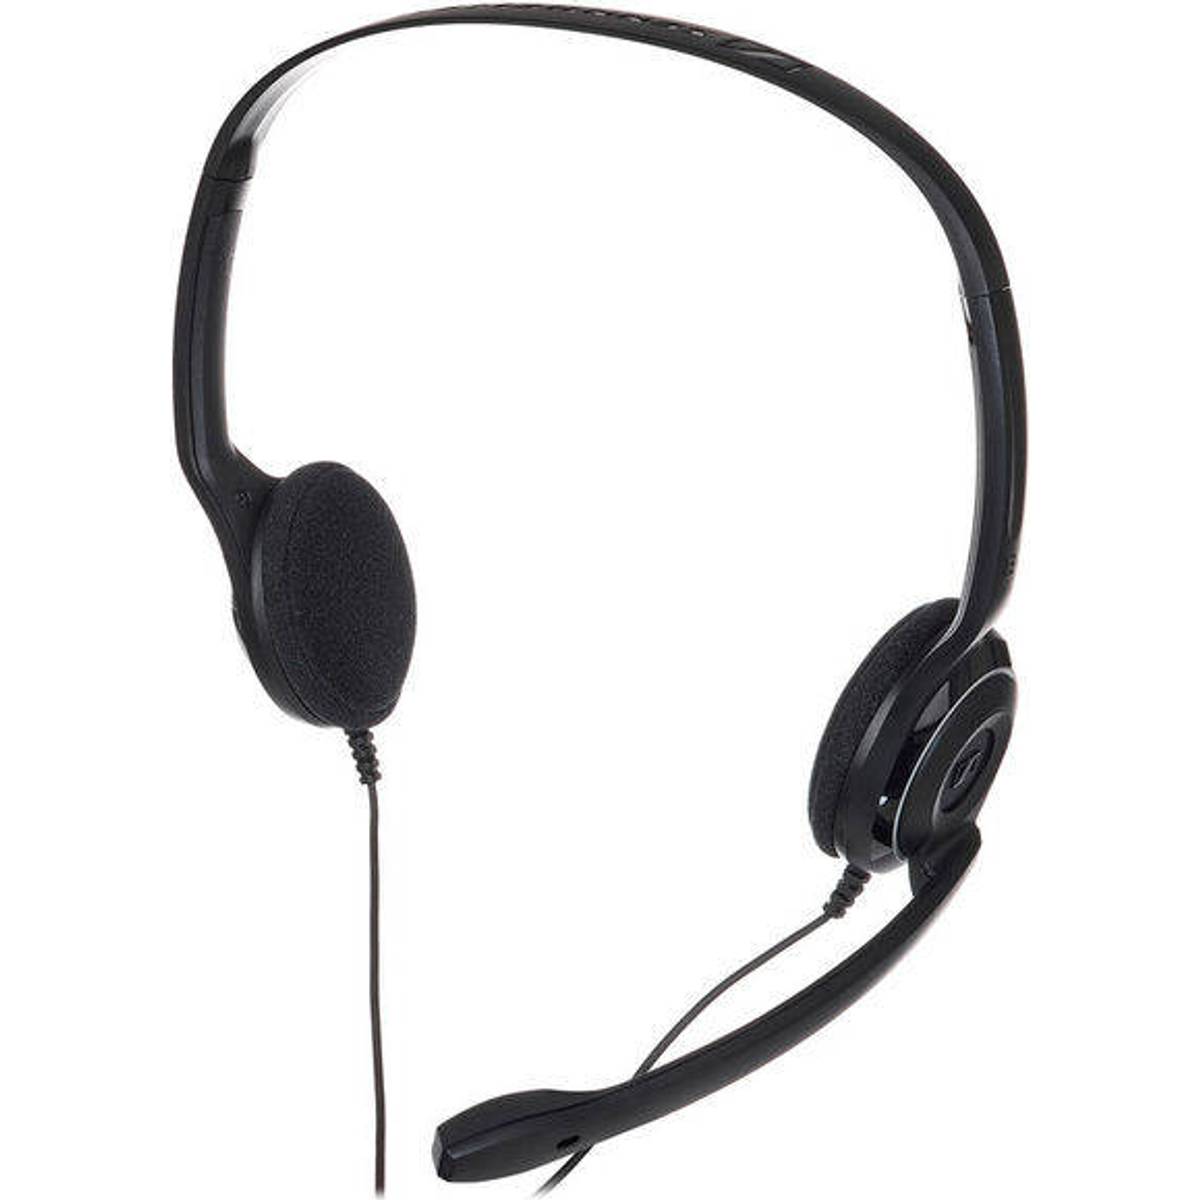 Sennheiser pc headset høretelefoner • Find billigste pris hos ...